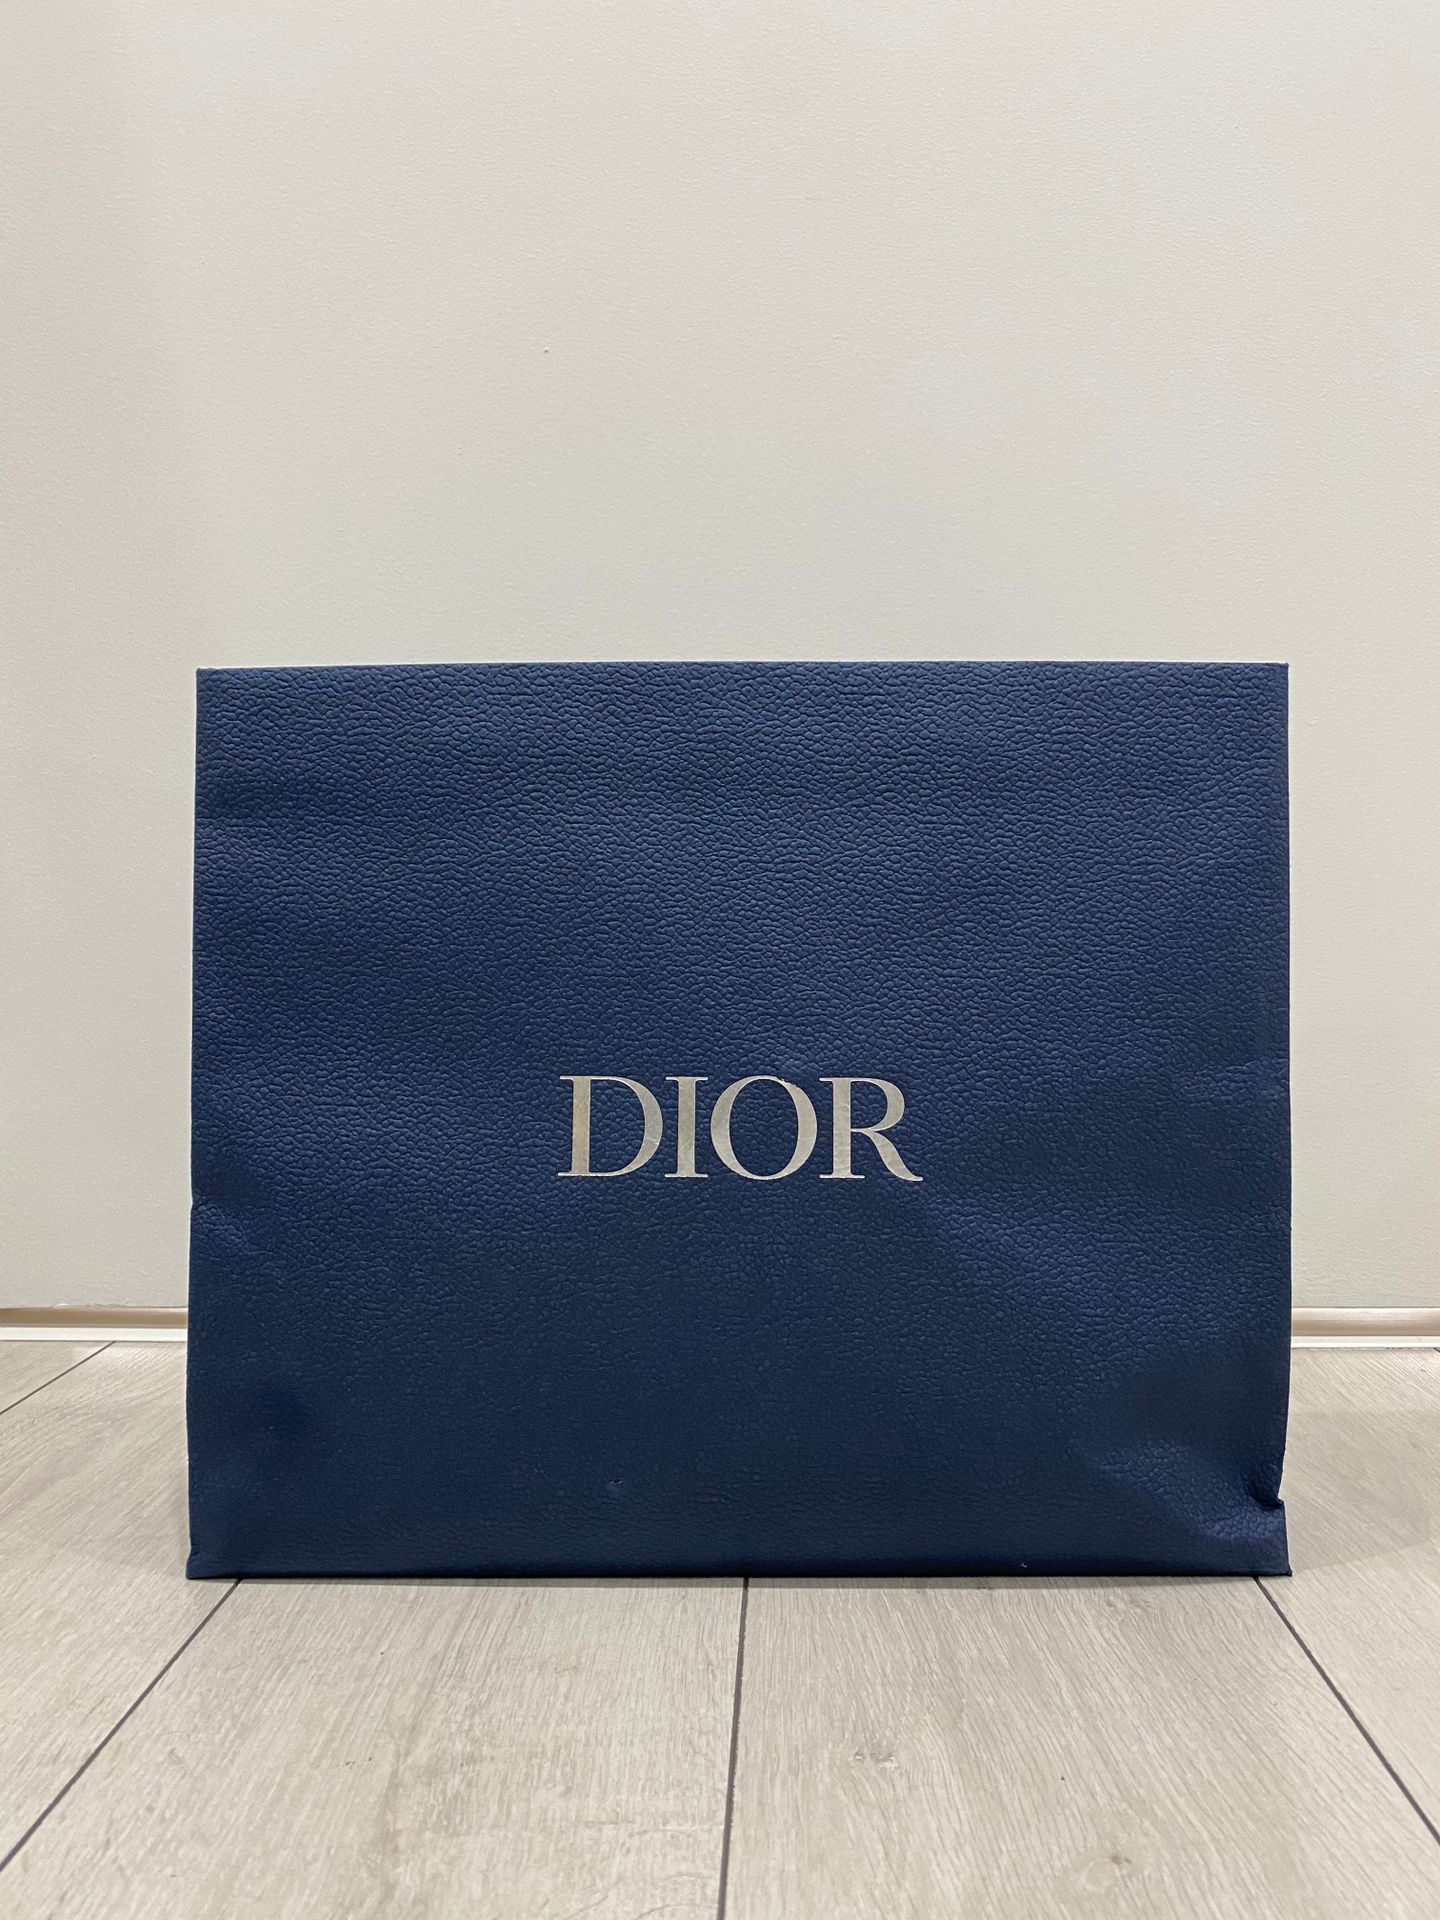 Pack Dior Produits de beauté Pack de productos de belleza Dior